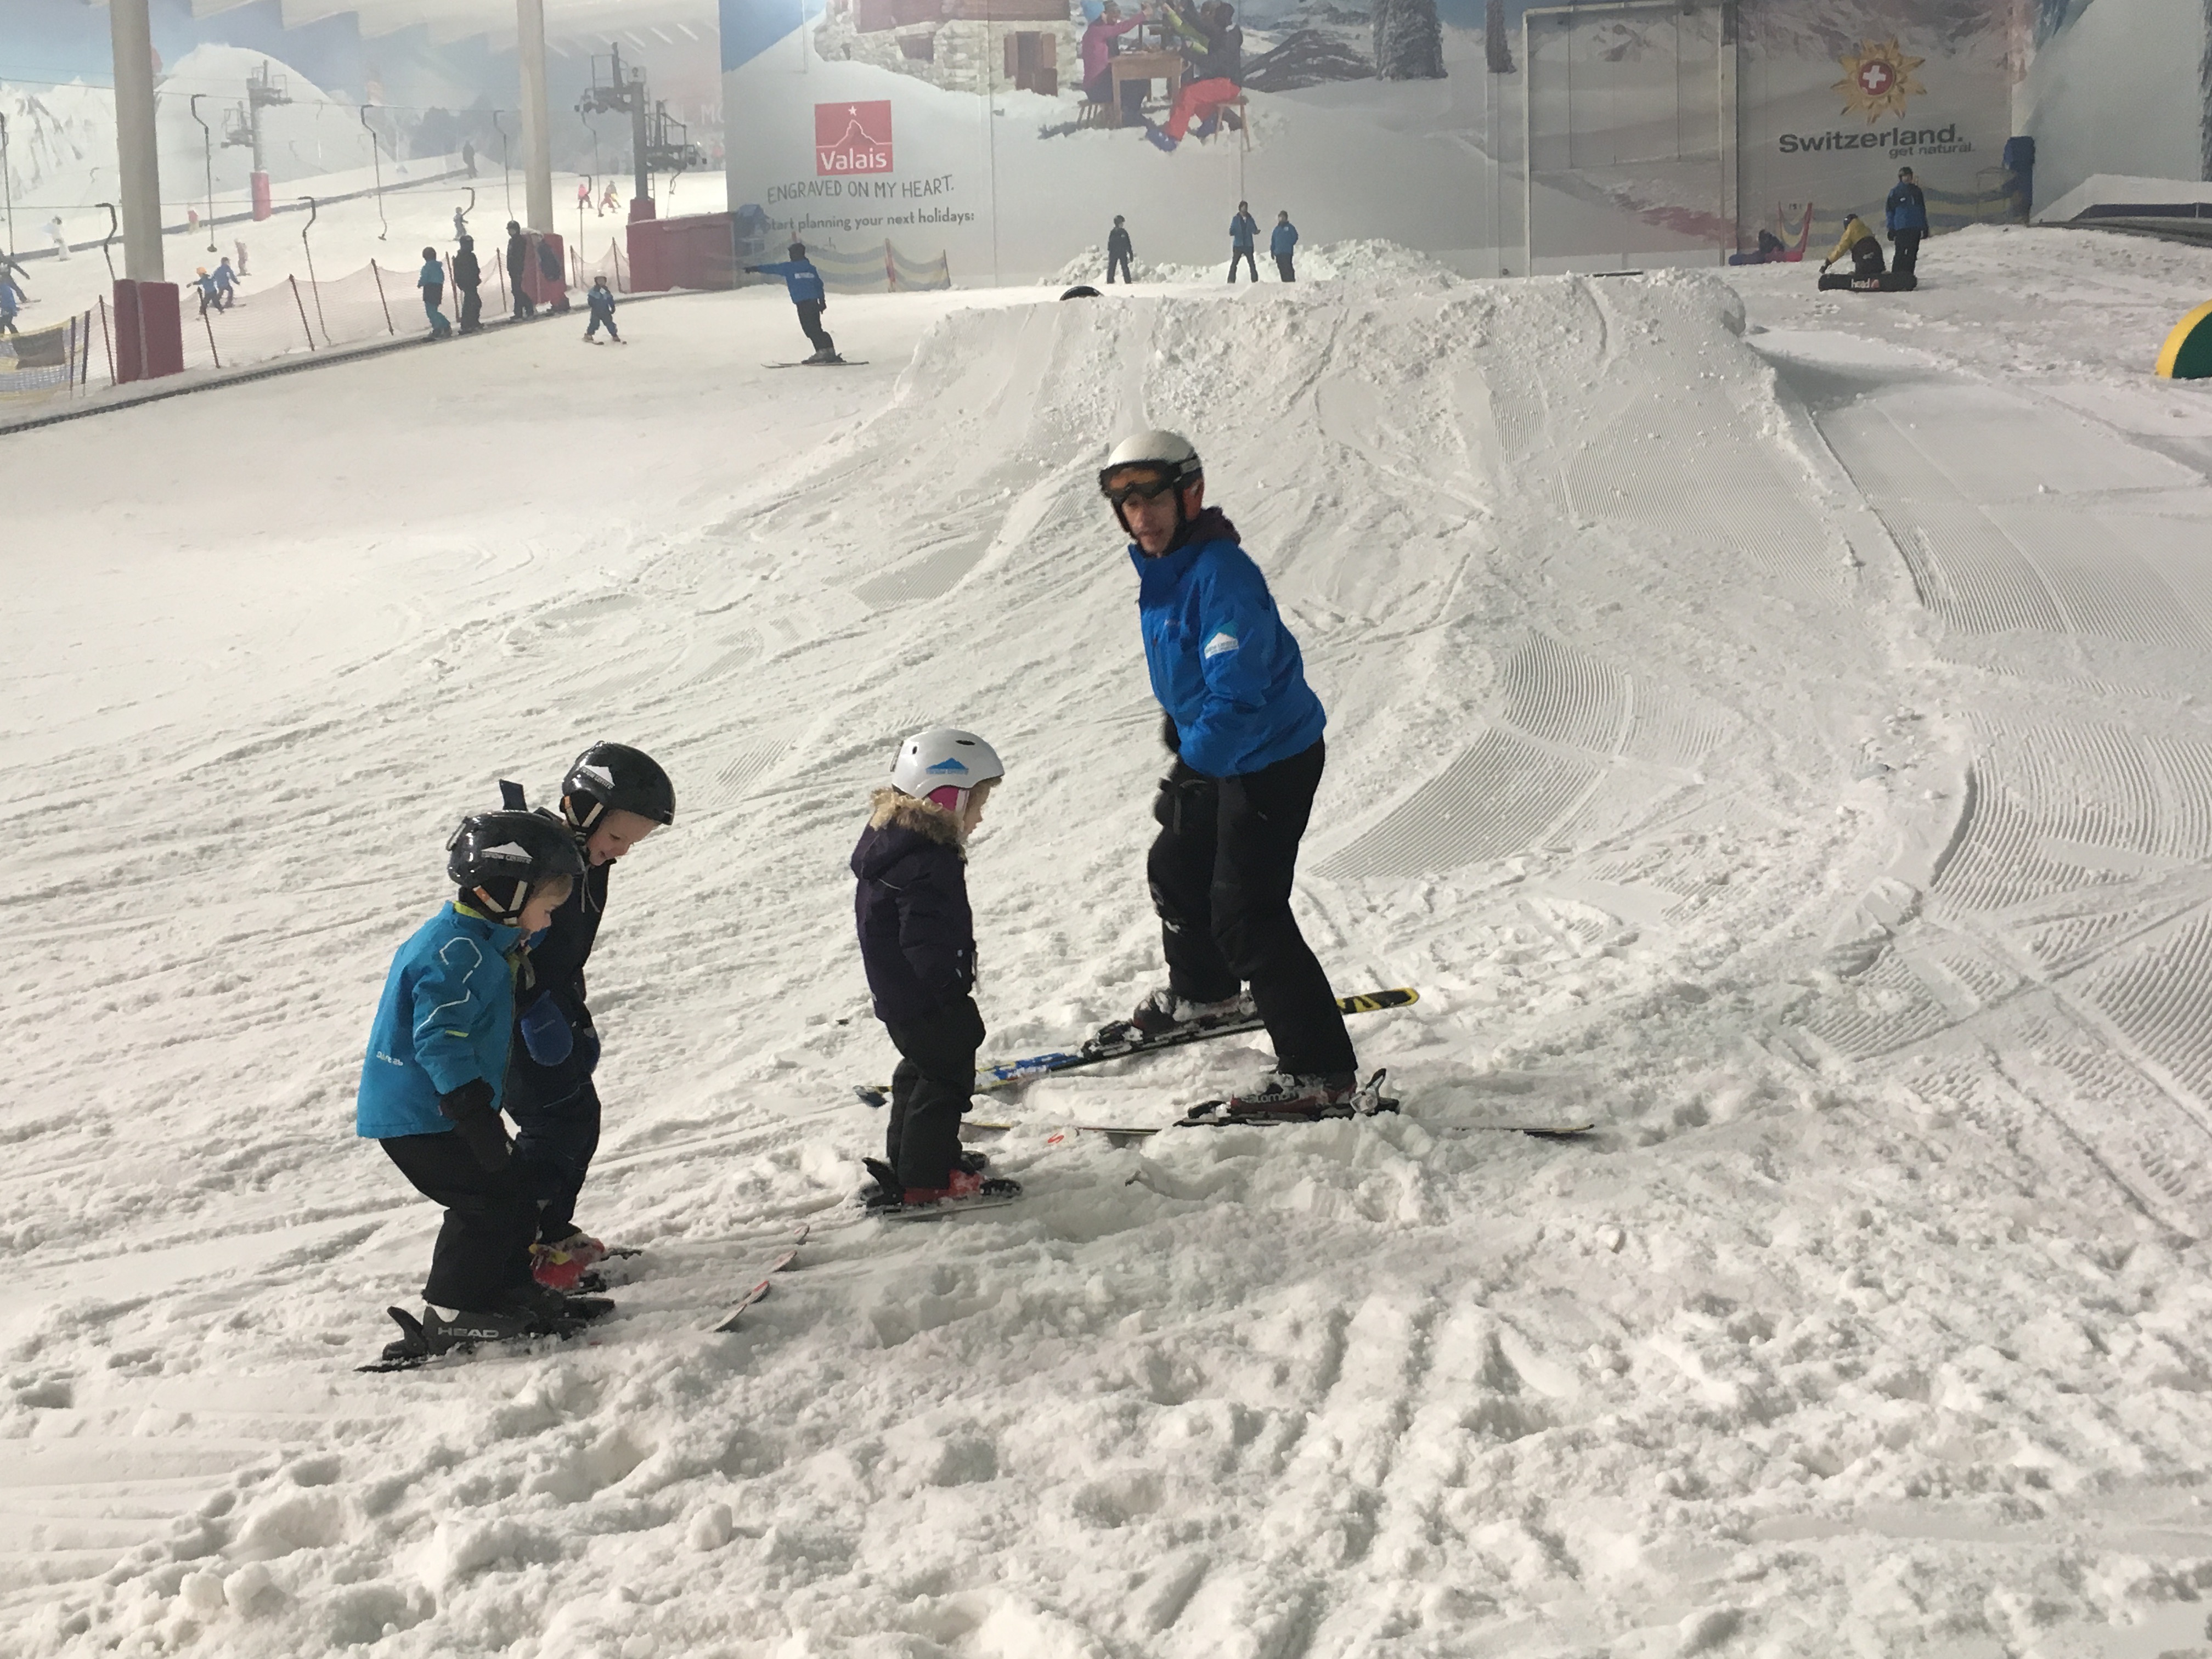 Skiing lesson at the Snow Centre, Hemel Hempstead